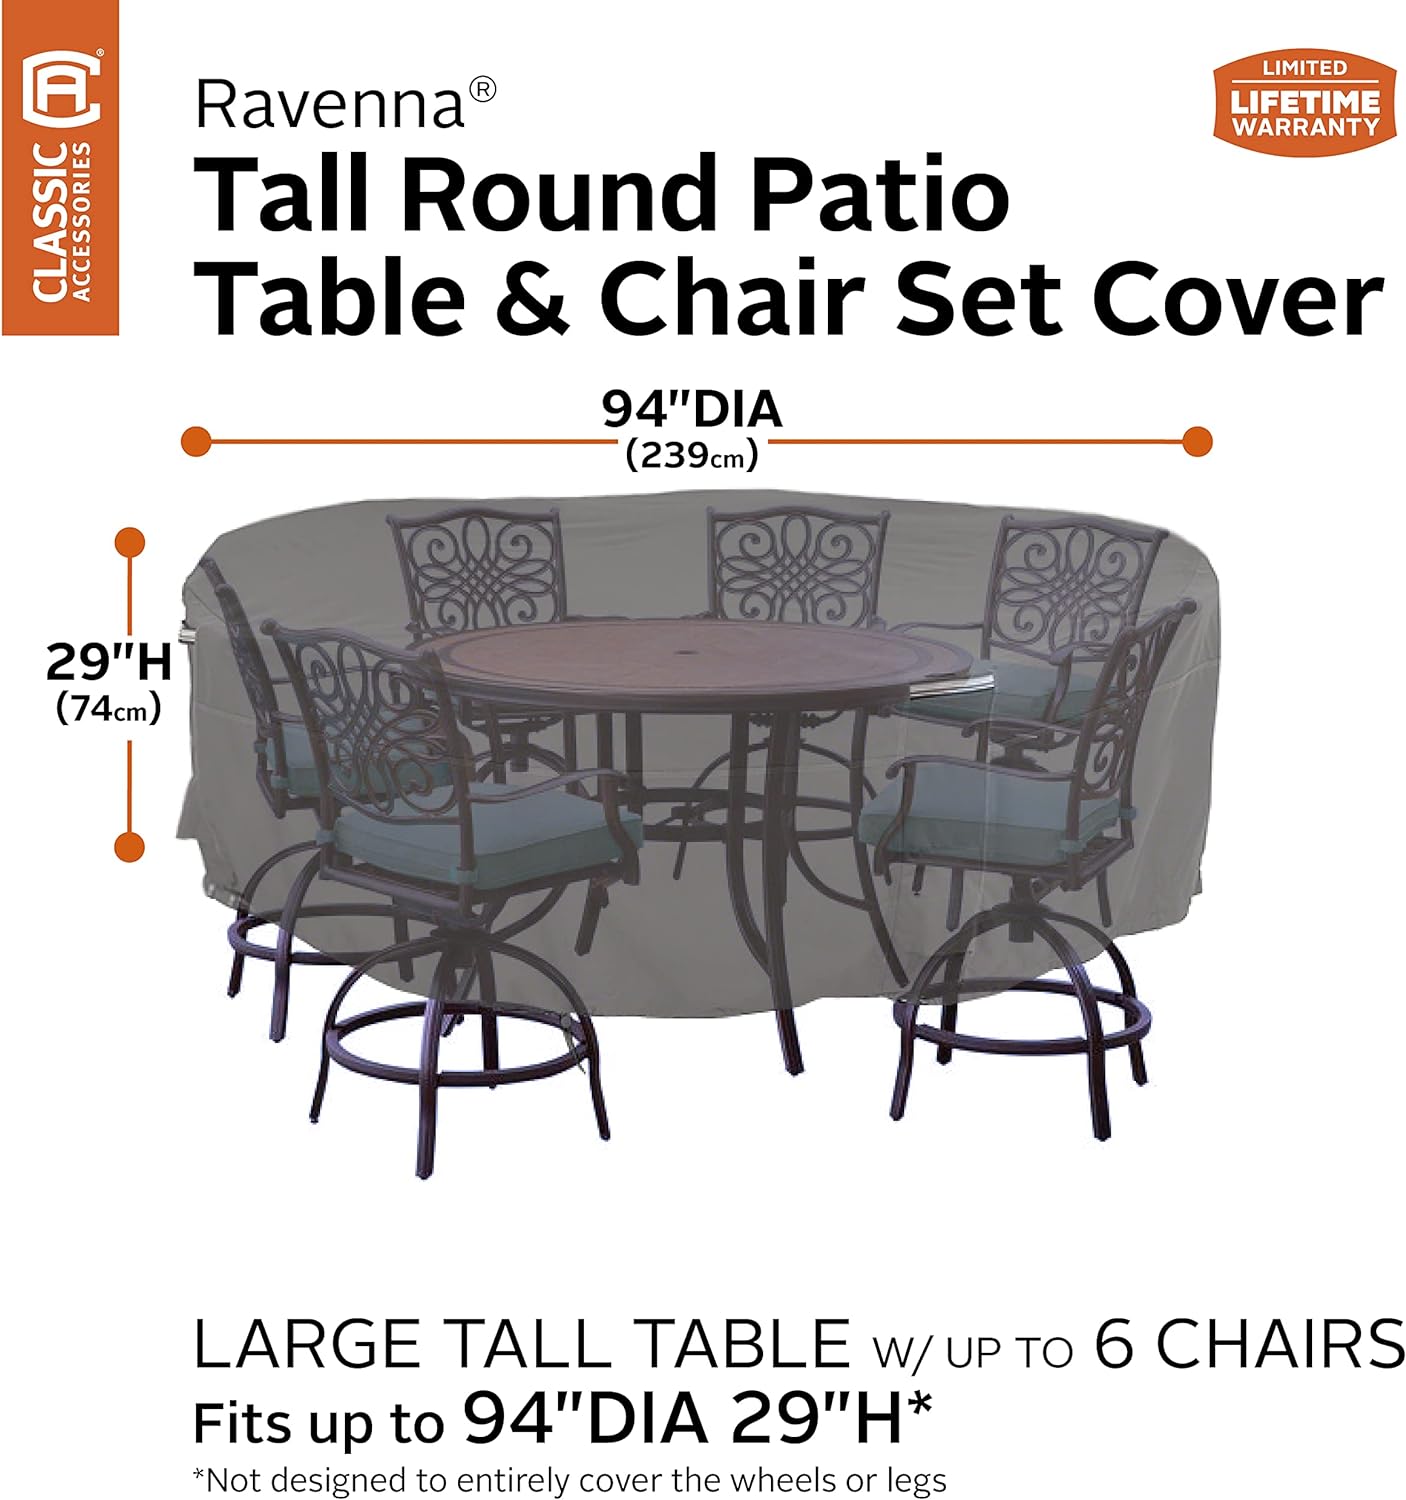 Classic Accessories Ravenna Tall Round Patio Table & Chair Set Cover - Premiu...